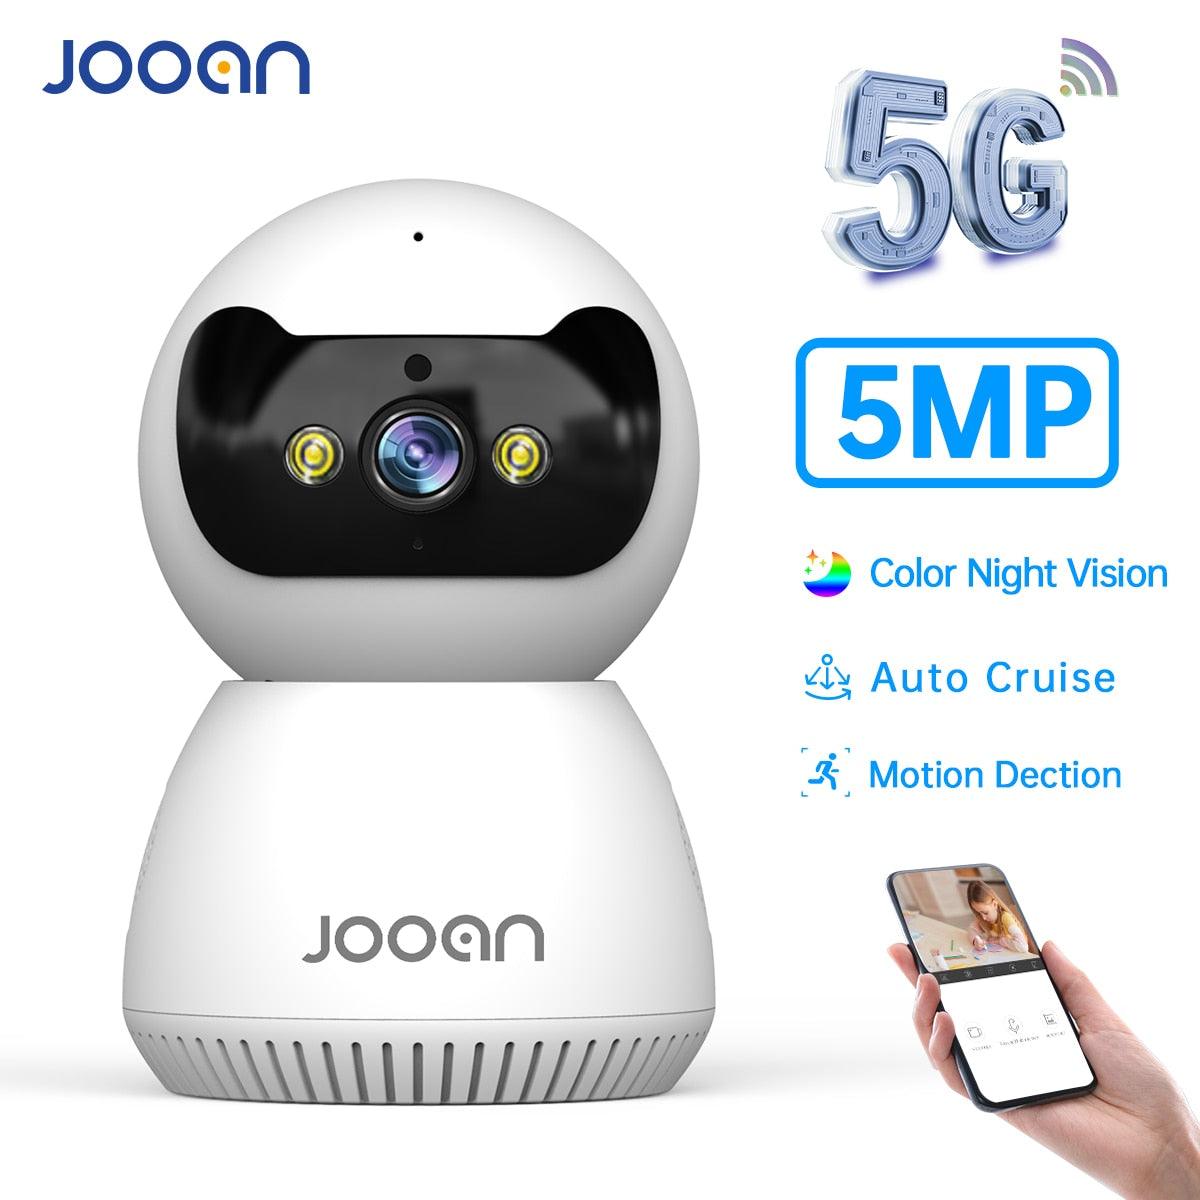 Jooan 5MP 3MP IP Camera 5G WiFi Home Security Camera 2-Way Audio CCTV Surveillance Camera Color Night Vision Smart Baby Monitor